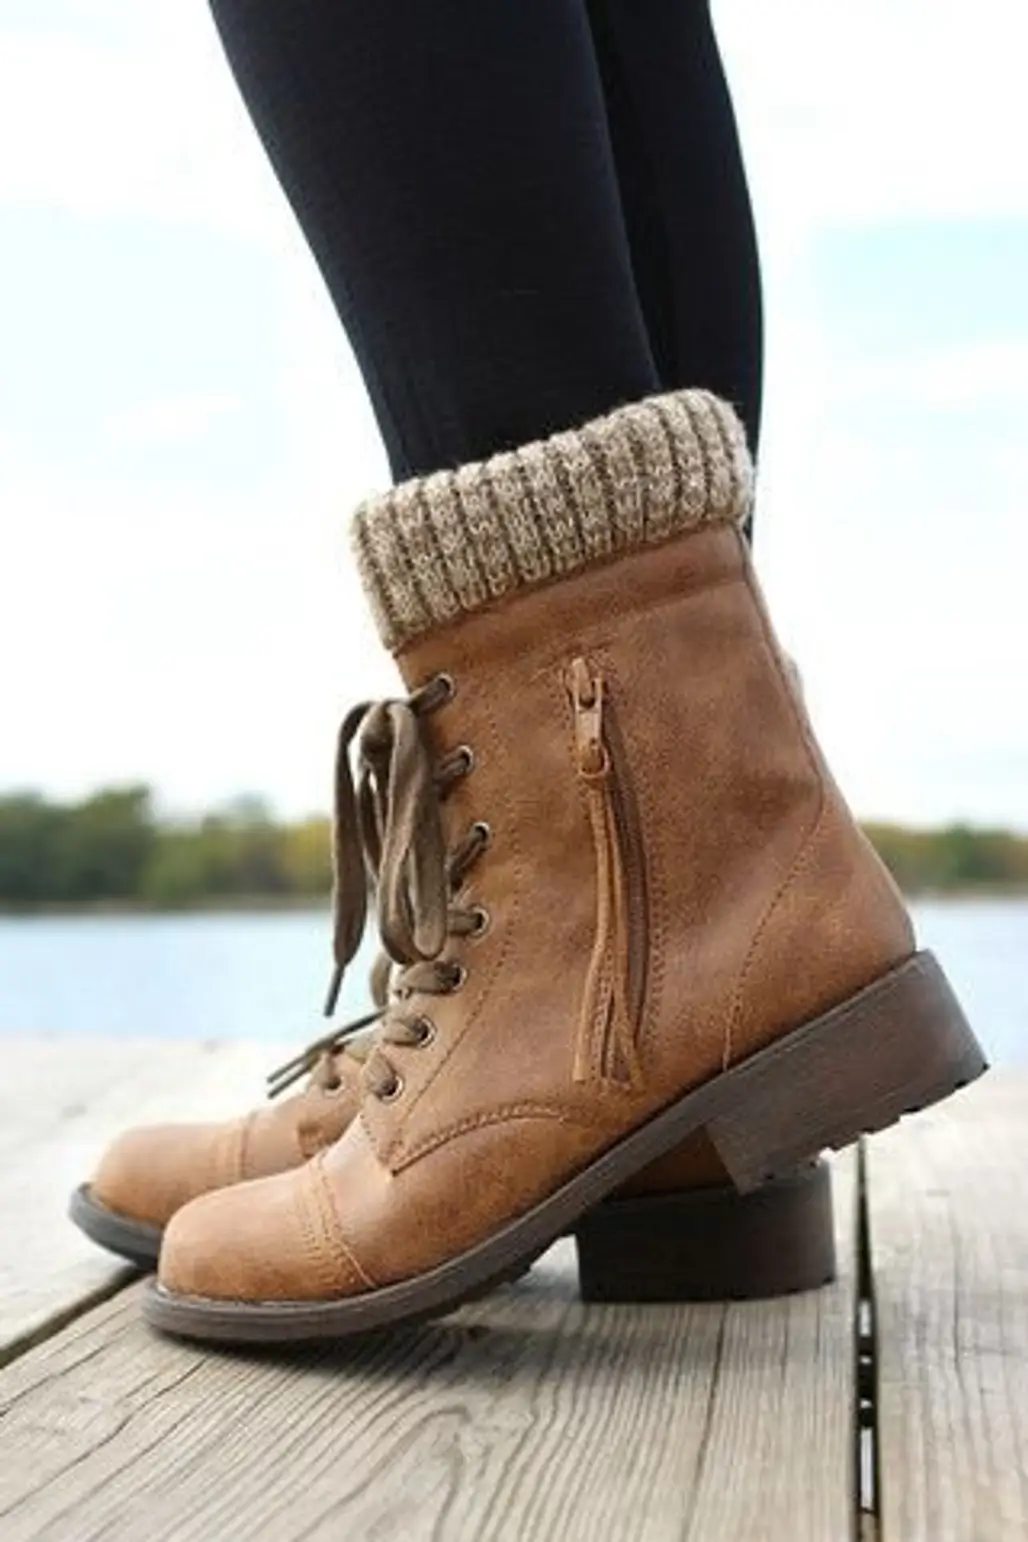 footwear,boot,brown,leather,shoe,